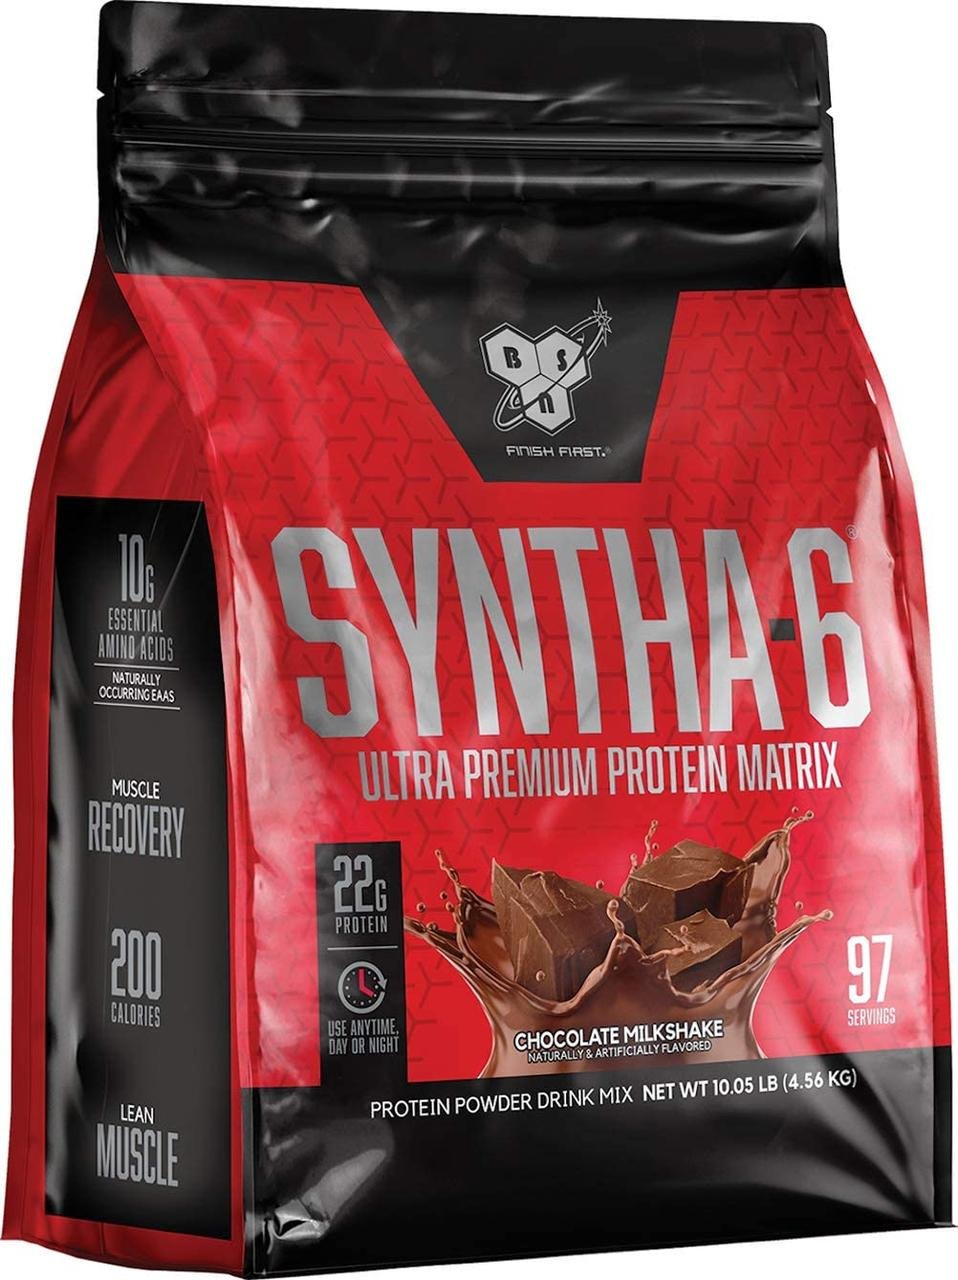 Комплексный протеин BSN Syntha-6 (4,56 кг) бсн синта 6 шоколад,  мл, BSN. Комплексный протеин. 